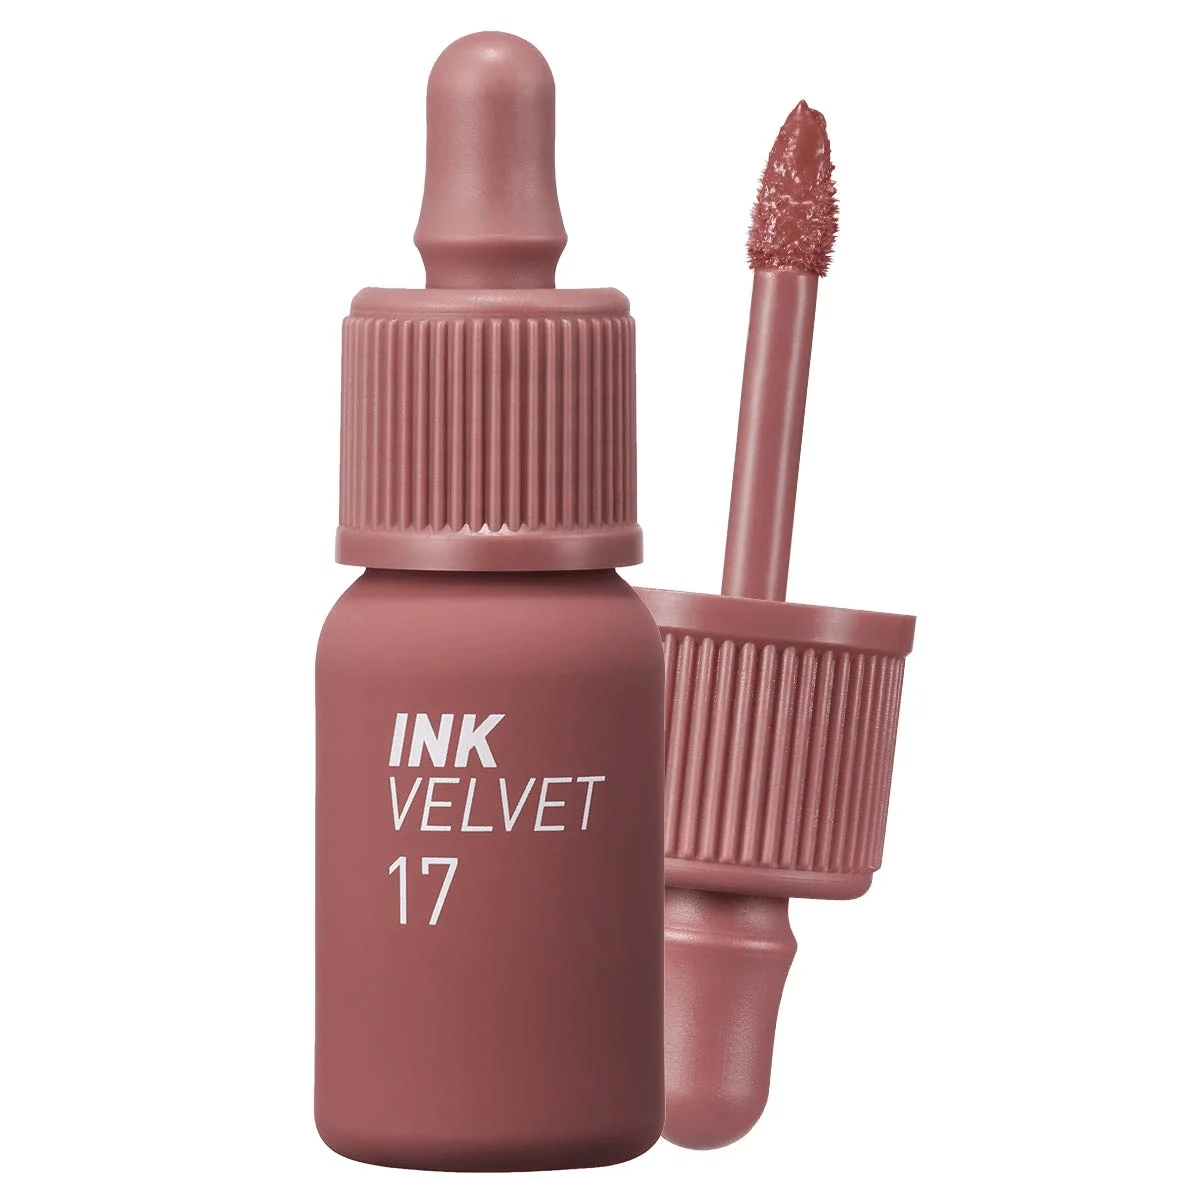 skincare-kbeauty-glowtime-peripera ink the velvet 017 rosy nude